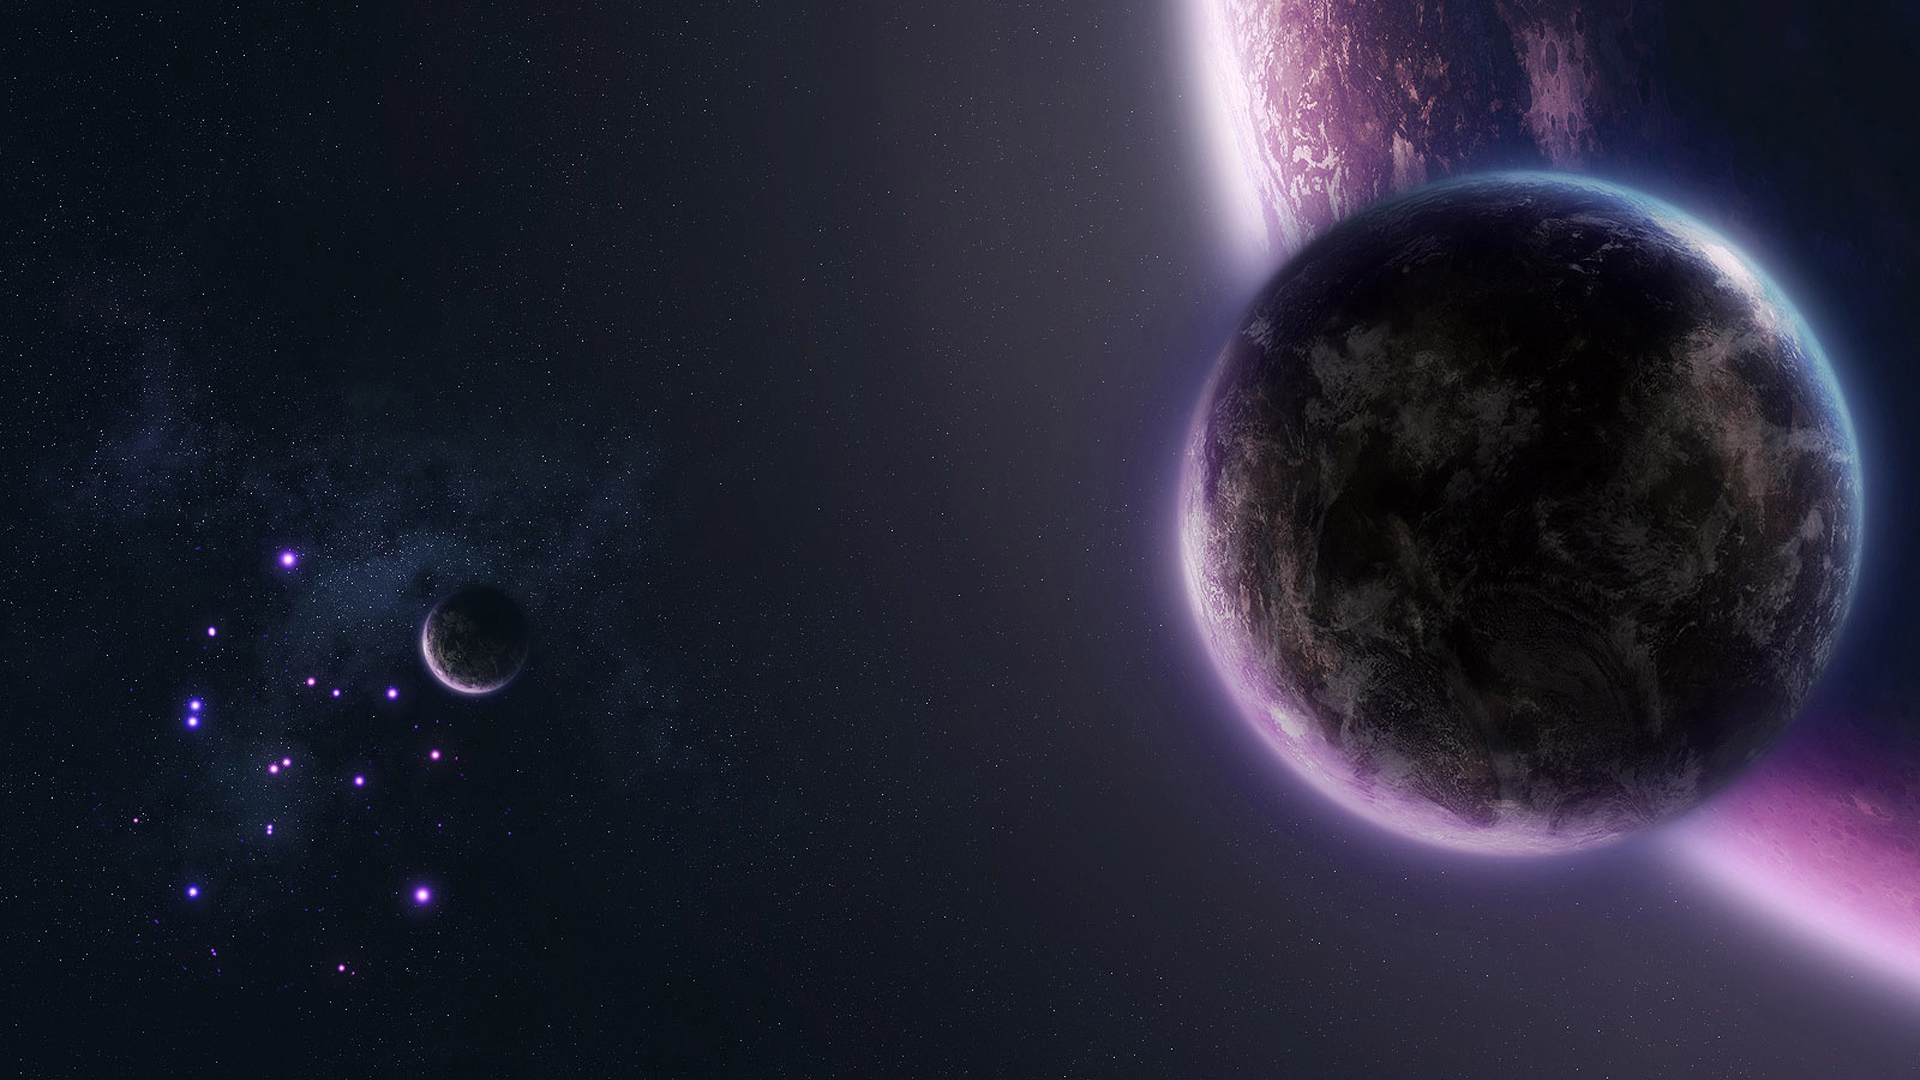 outer space, stars, planets, purple, science fiction - desktop wallpaper